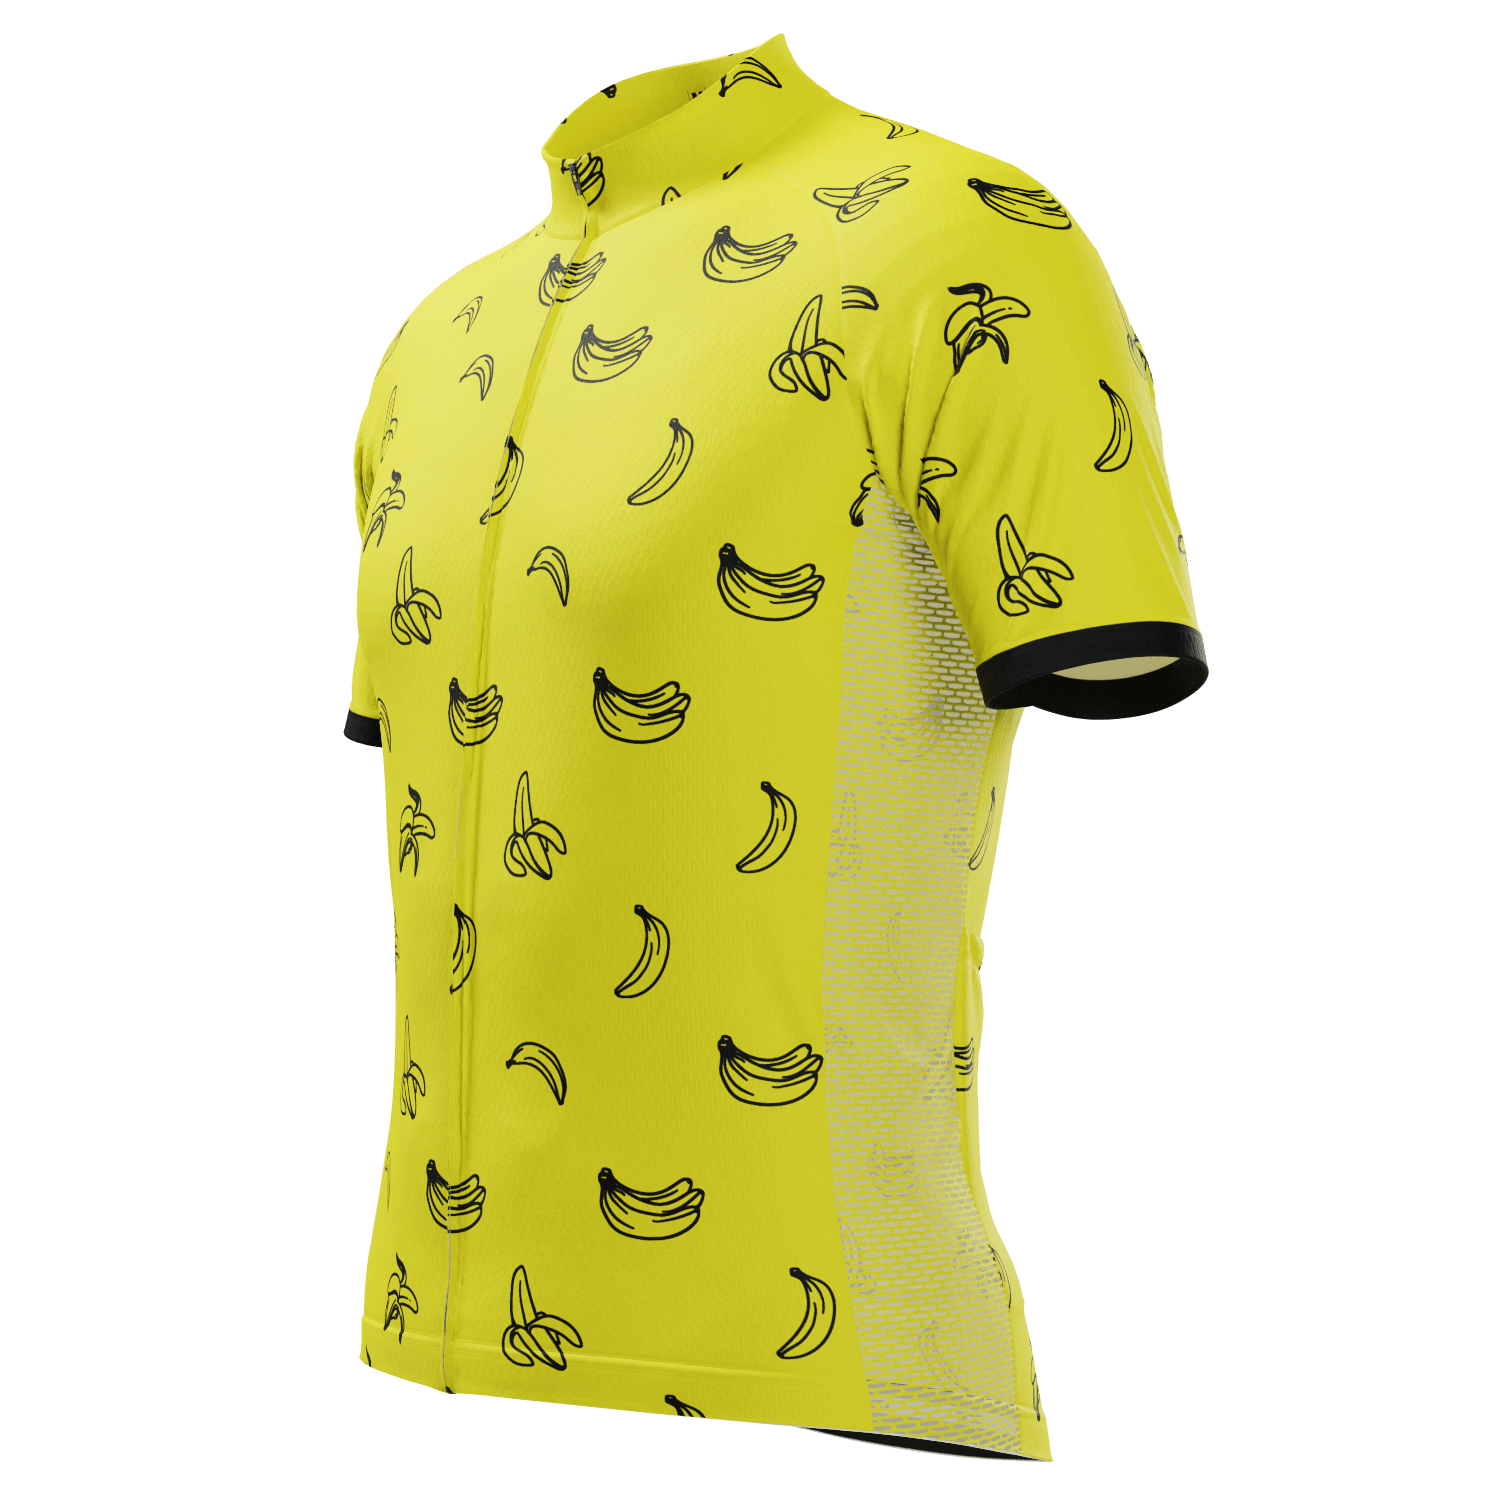 Men's Must Be Bananas Short Sleeve Cycling Jersey